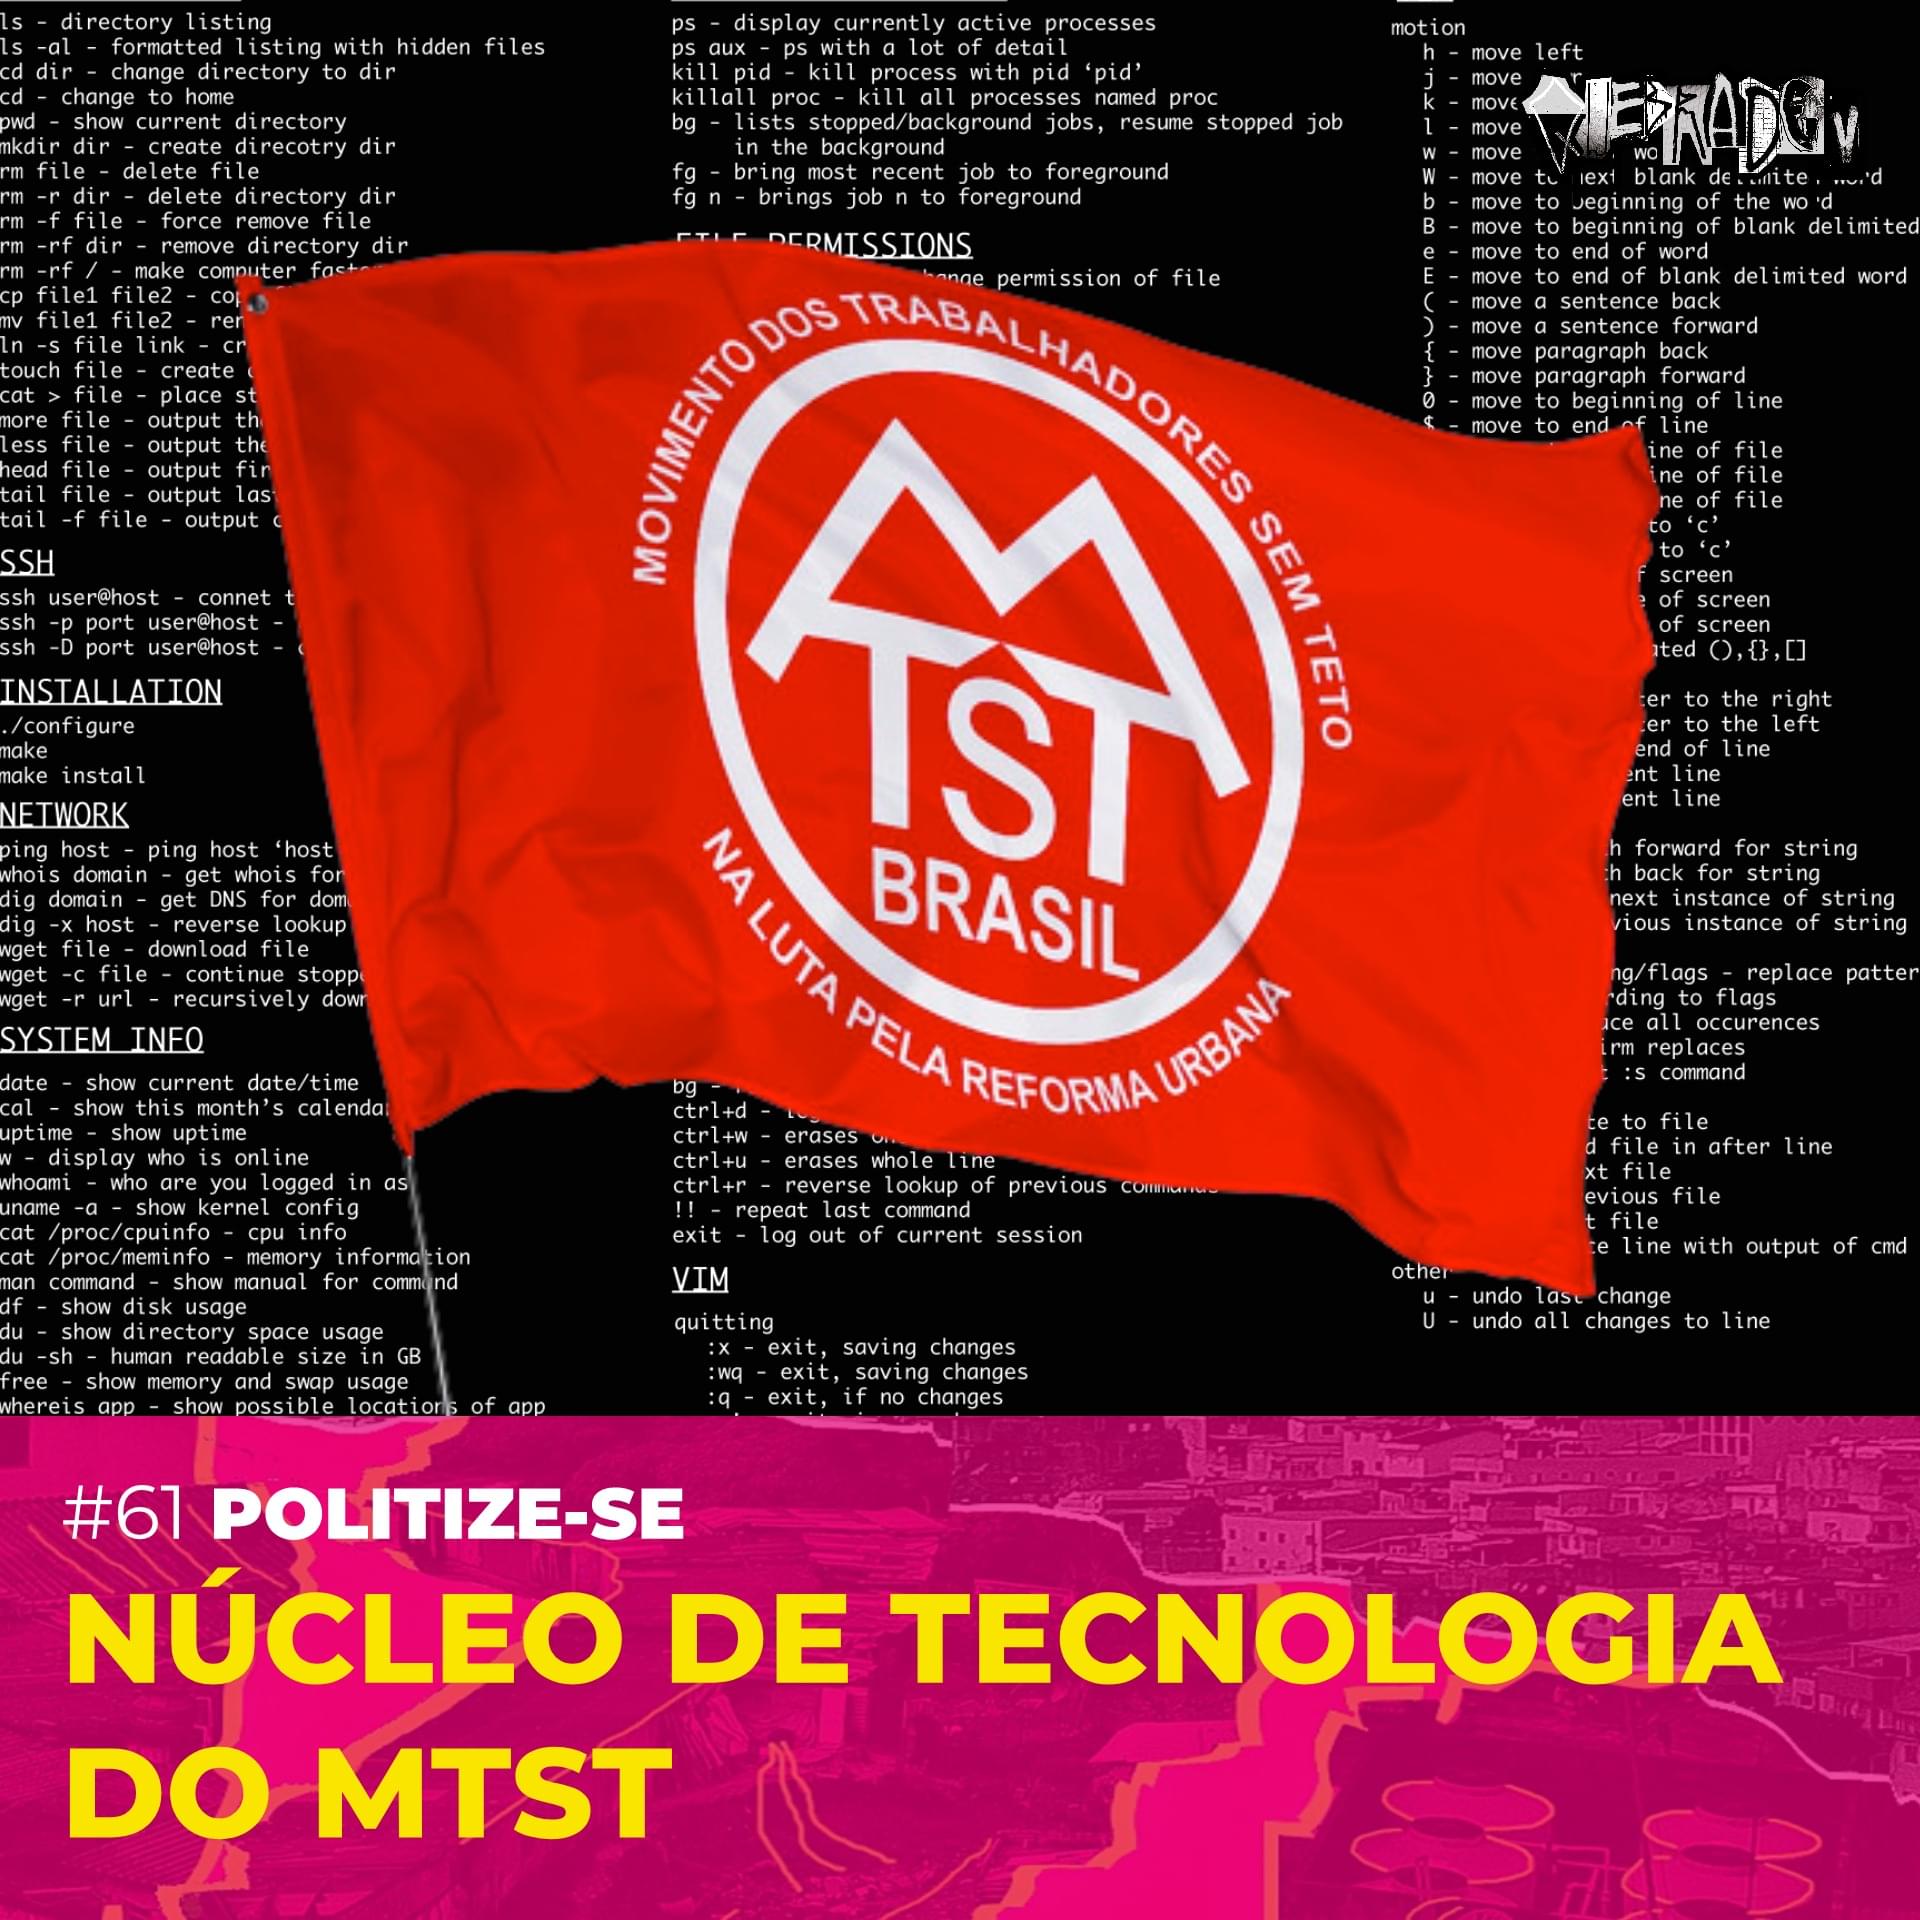 #61 - [Politize-se] Núcleo de Tecnologia do MTST Cover